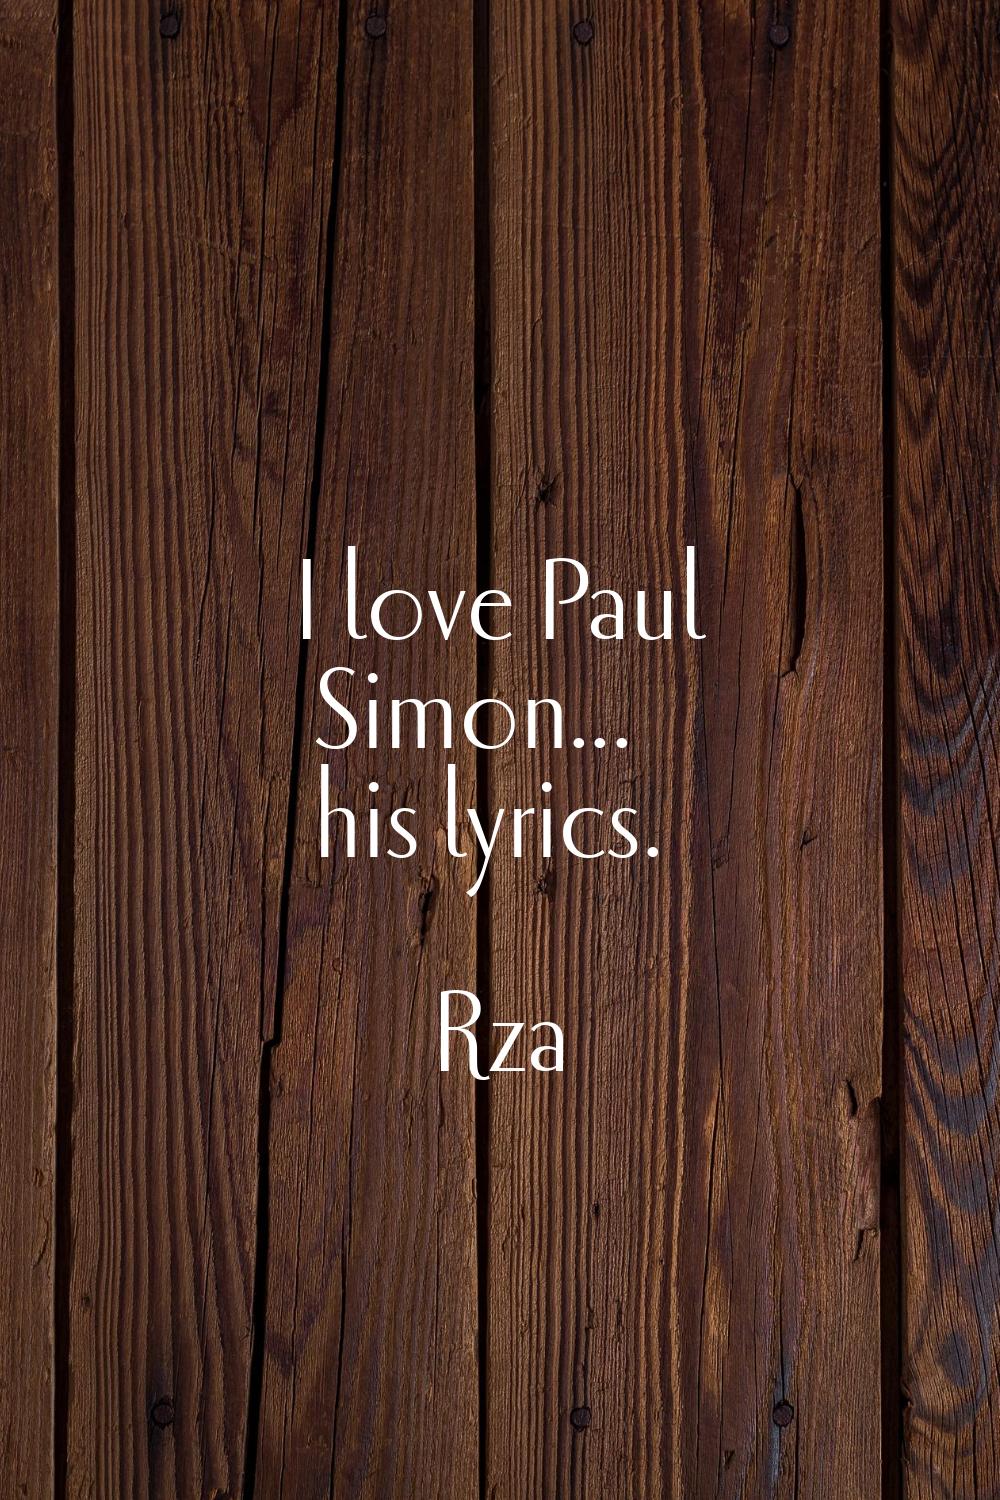 I love Paul Simon... his lyrics.